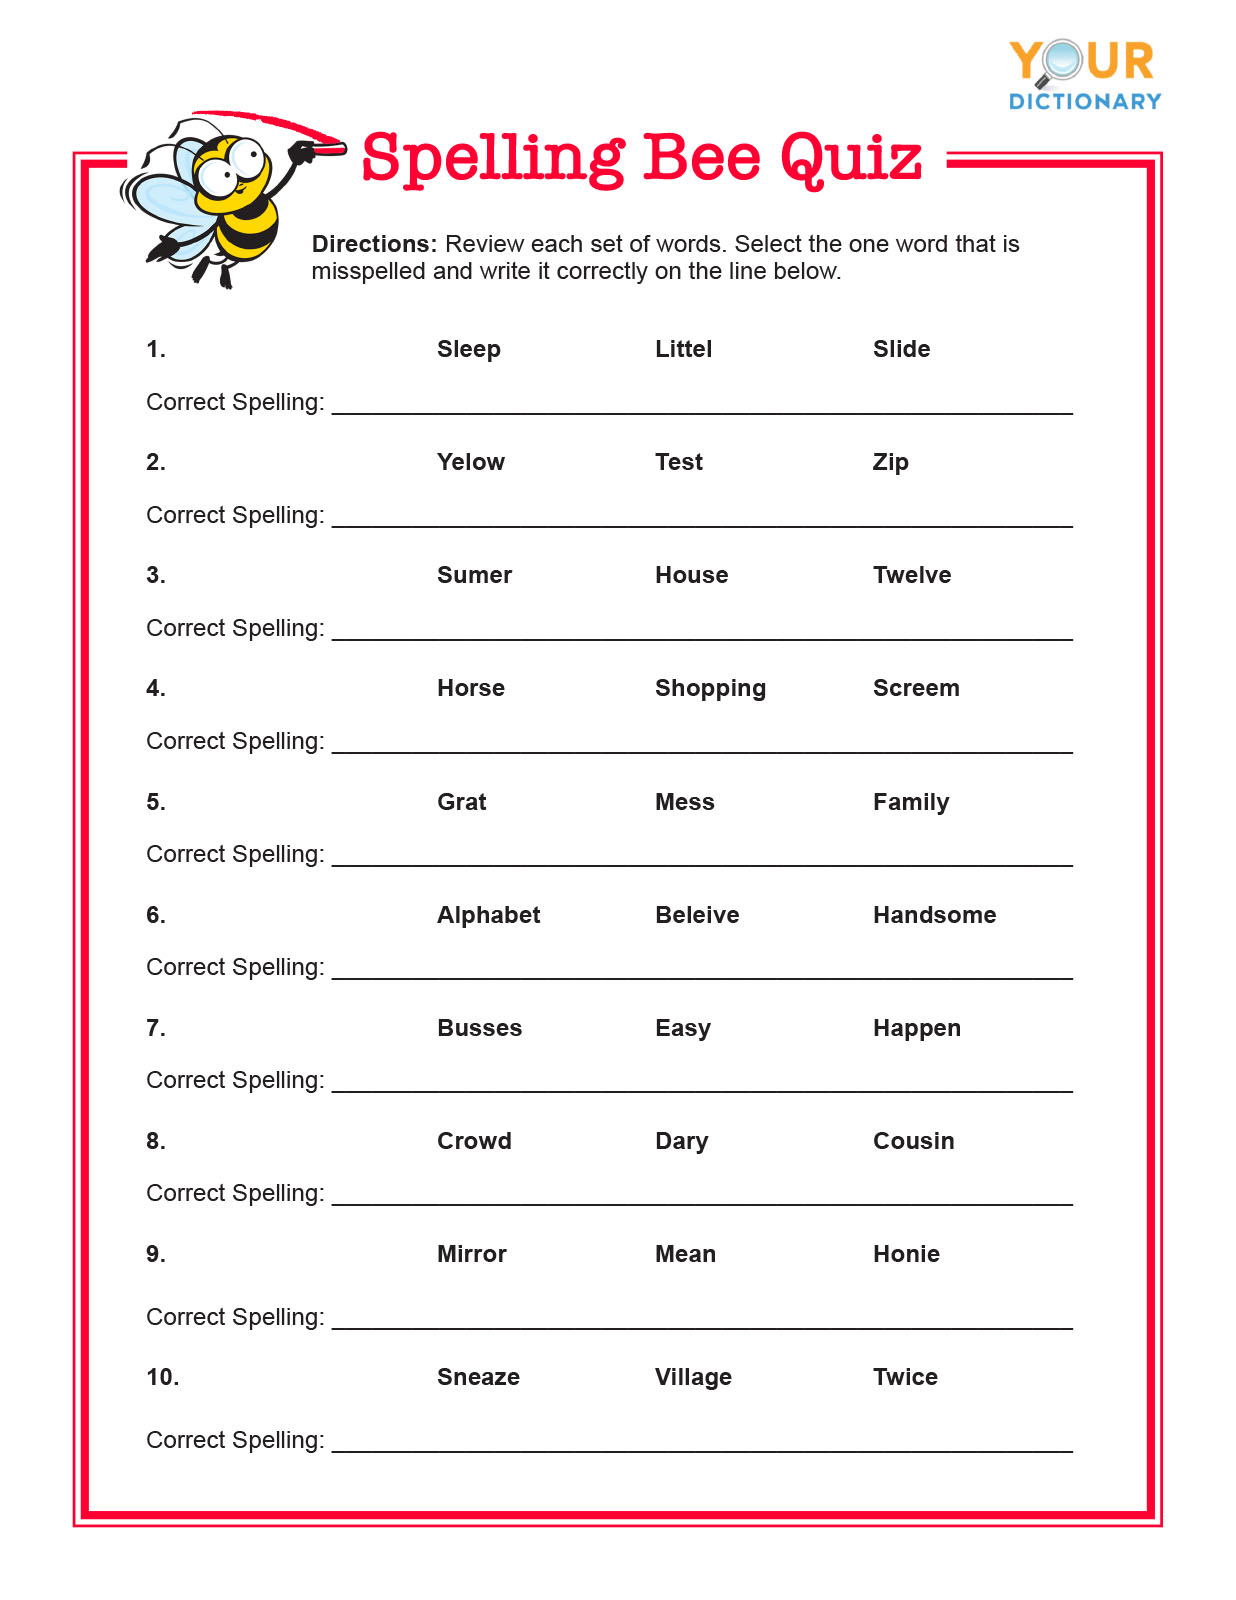 spelling bee quiz for grades 1-3